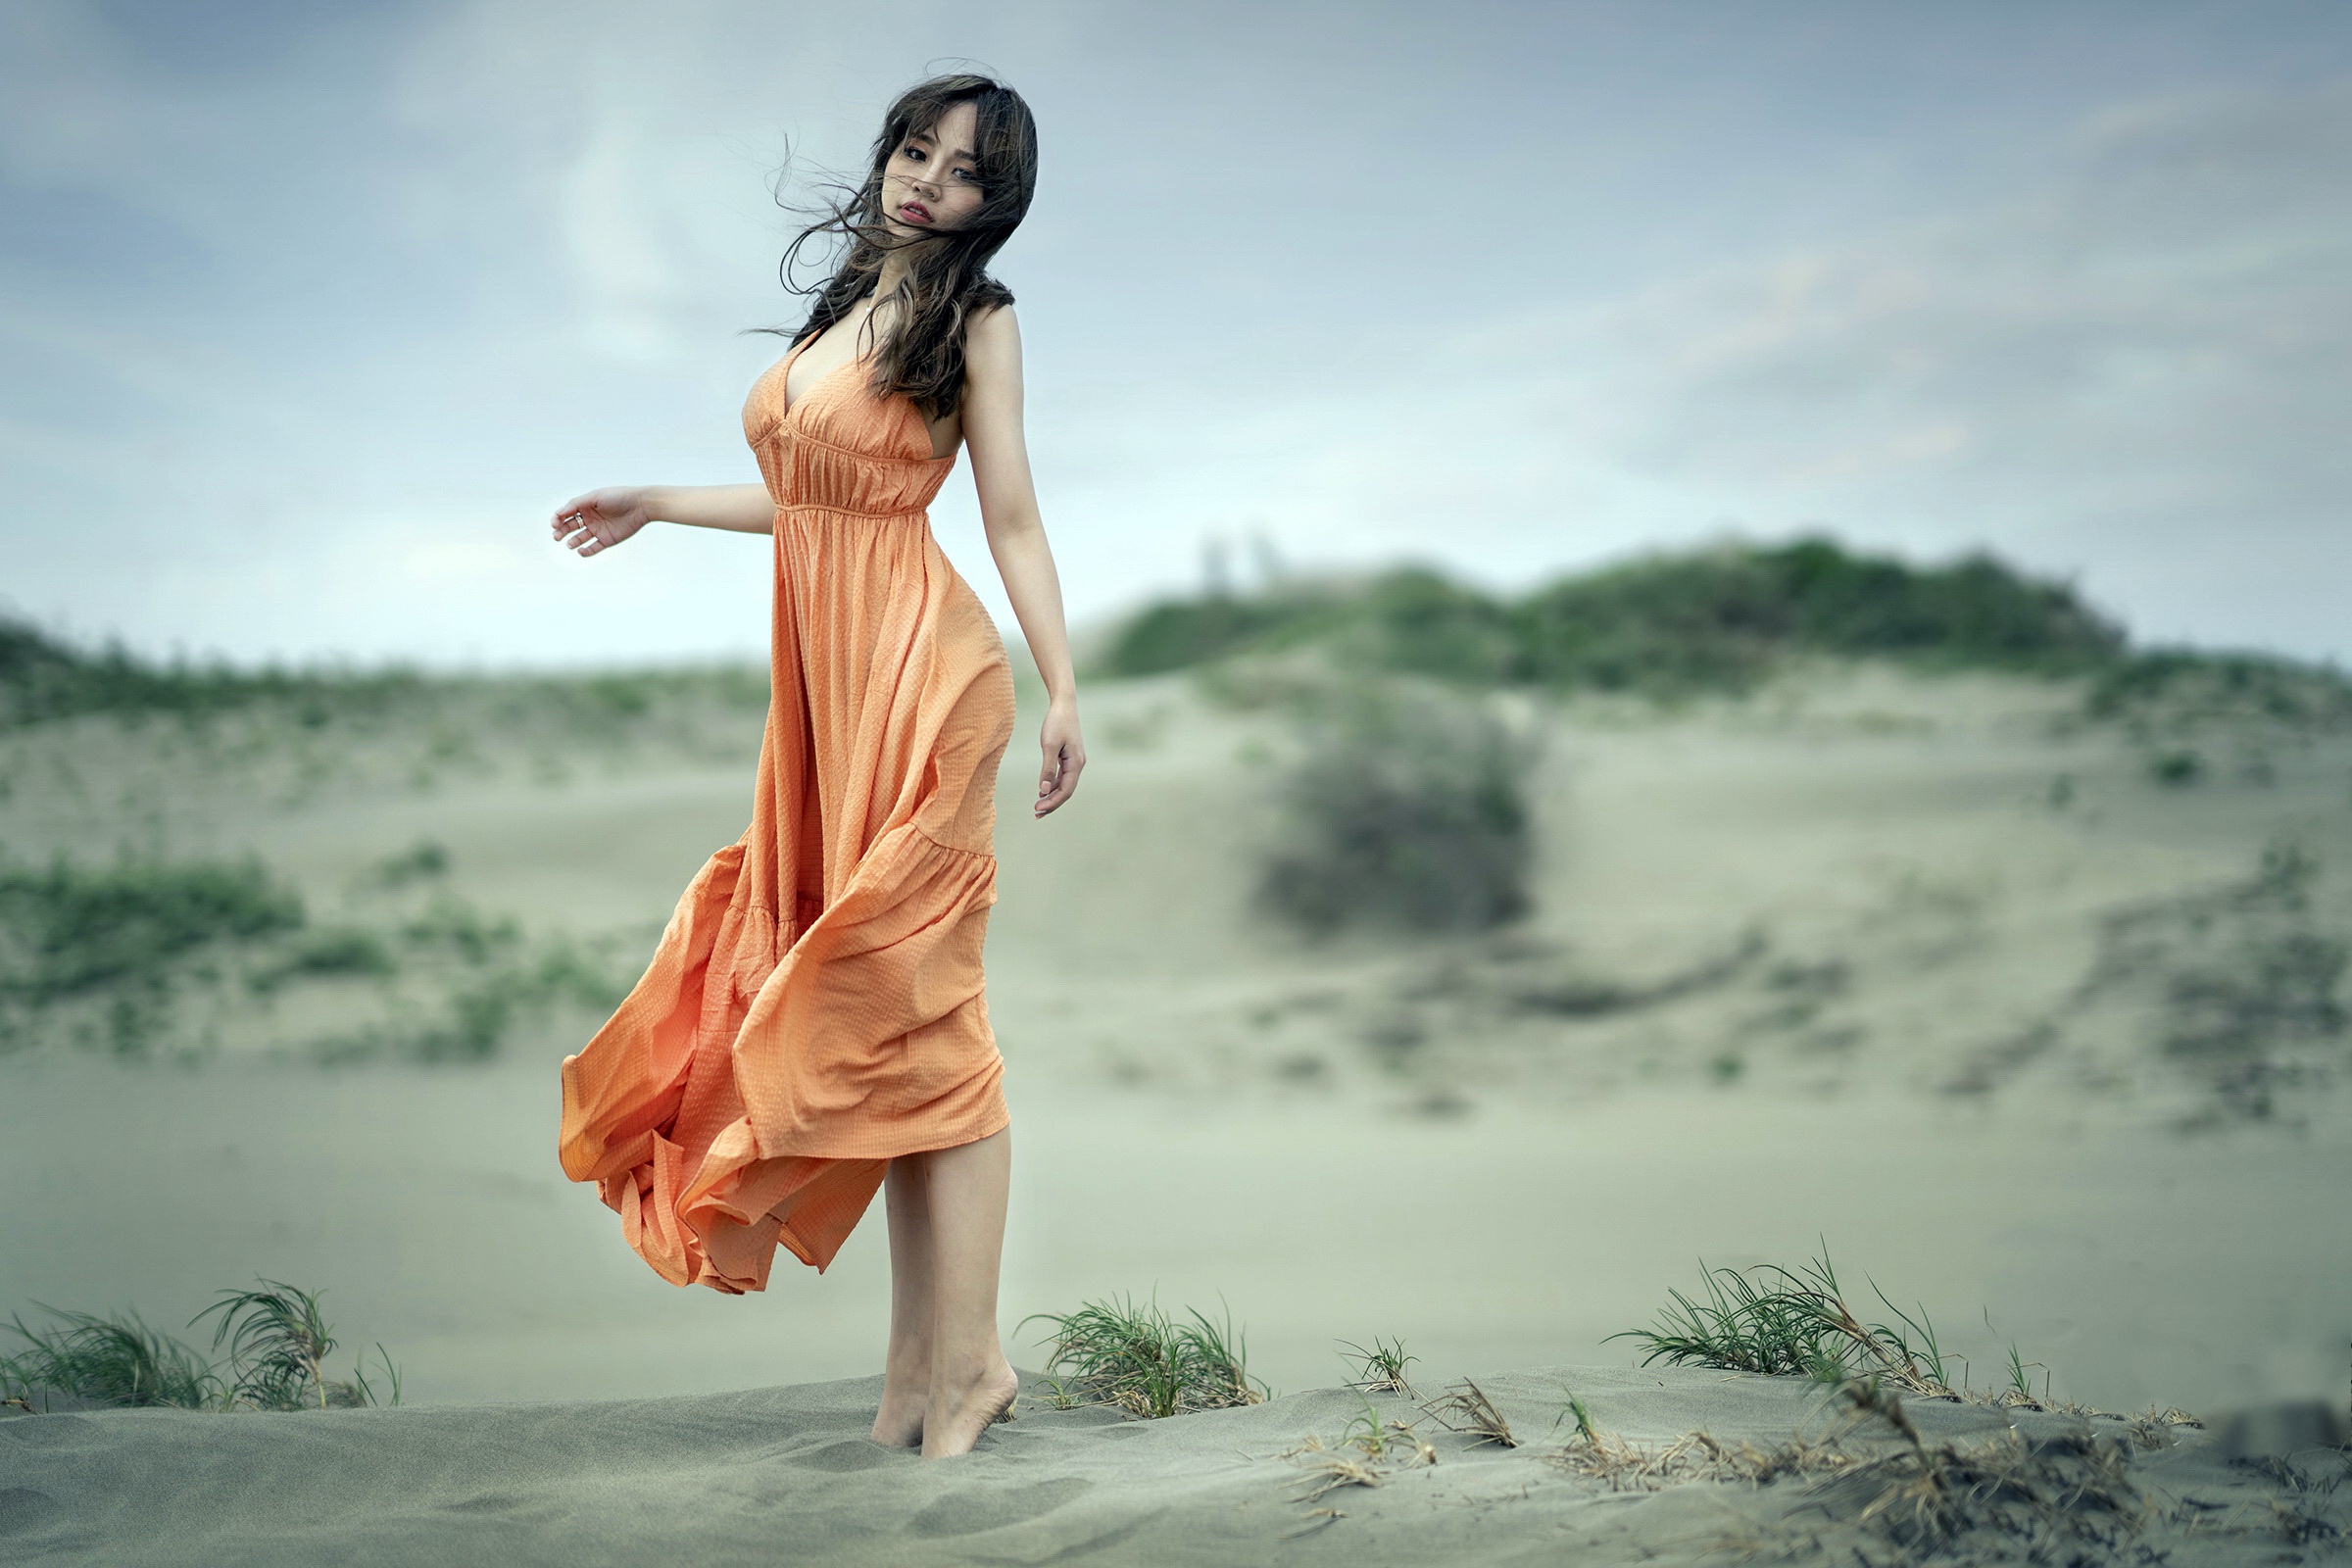 Asian Women Model Dress Orange Dress Women Outdoors Barefoot Dark Hair Looking At Viewer Standing Ti 2400x1600